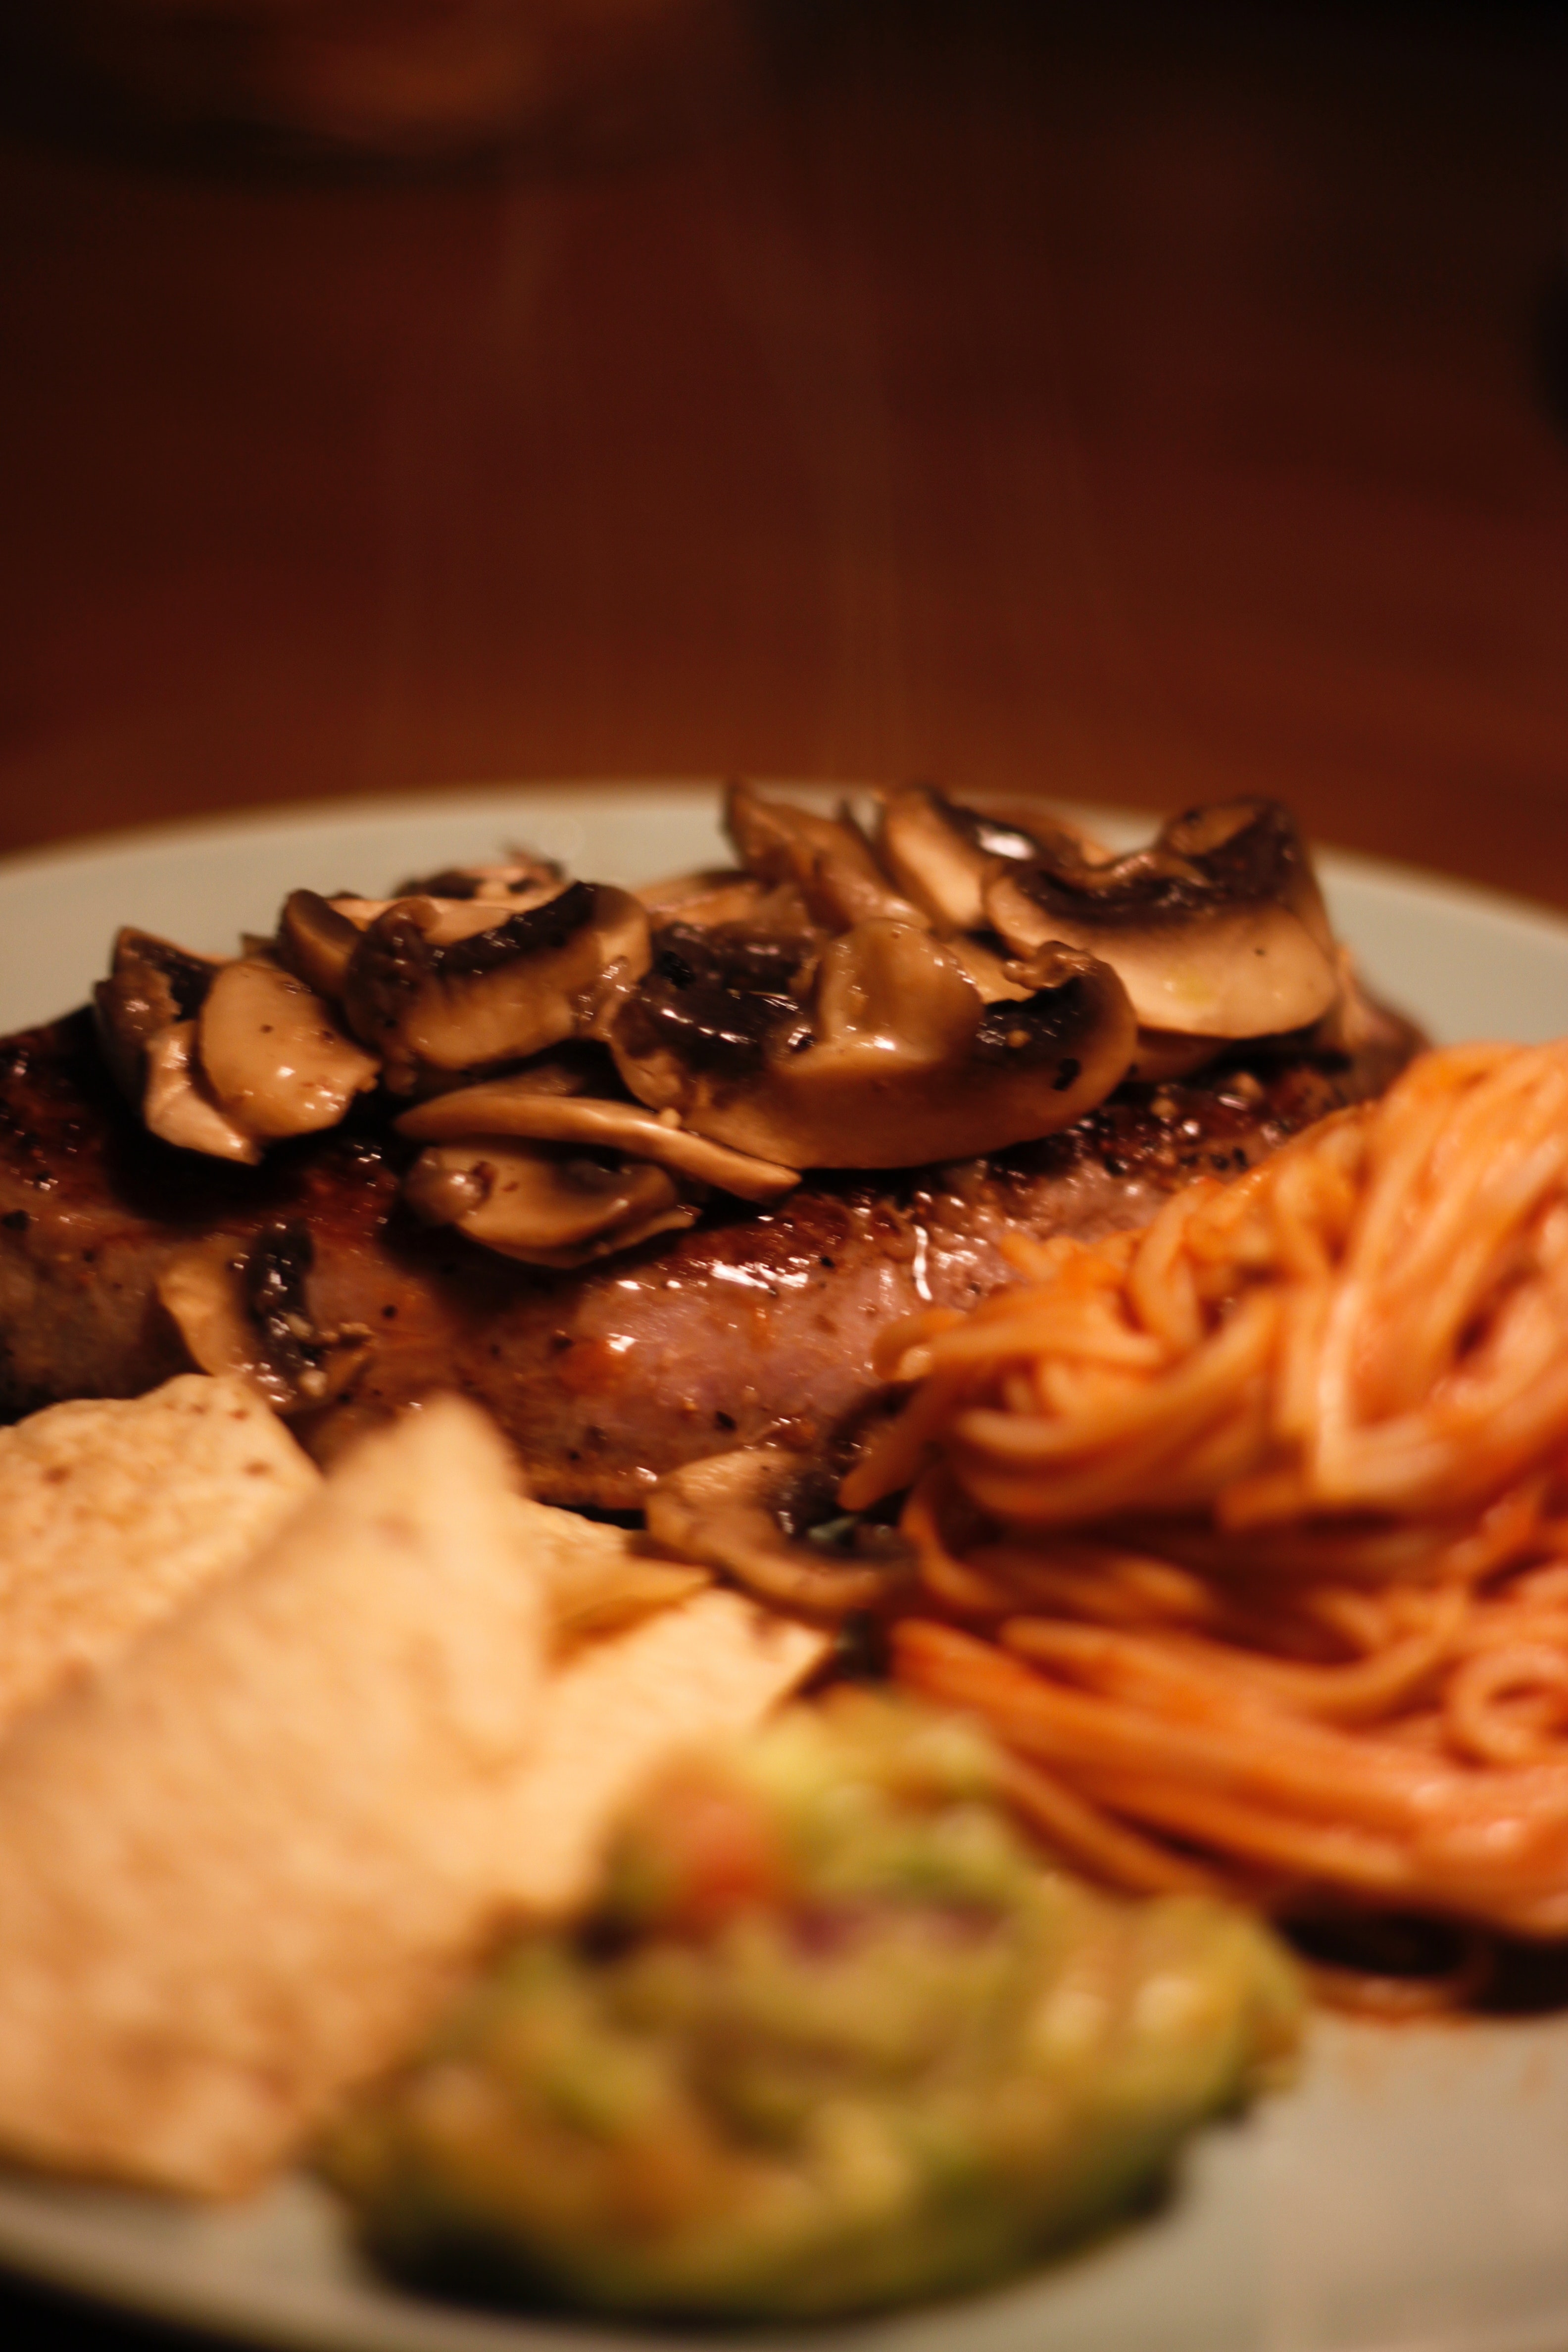 Steak With Mushroom And Spaghetti, Beef, Steak, Spaghetti, Plate, HQ Photo